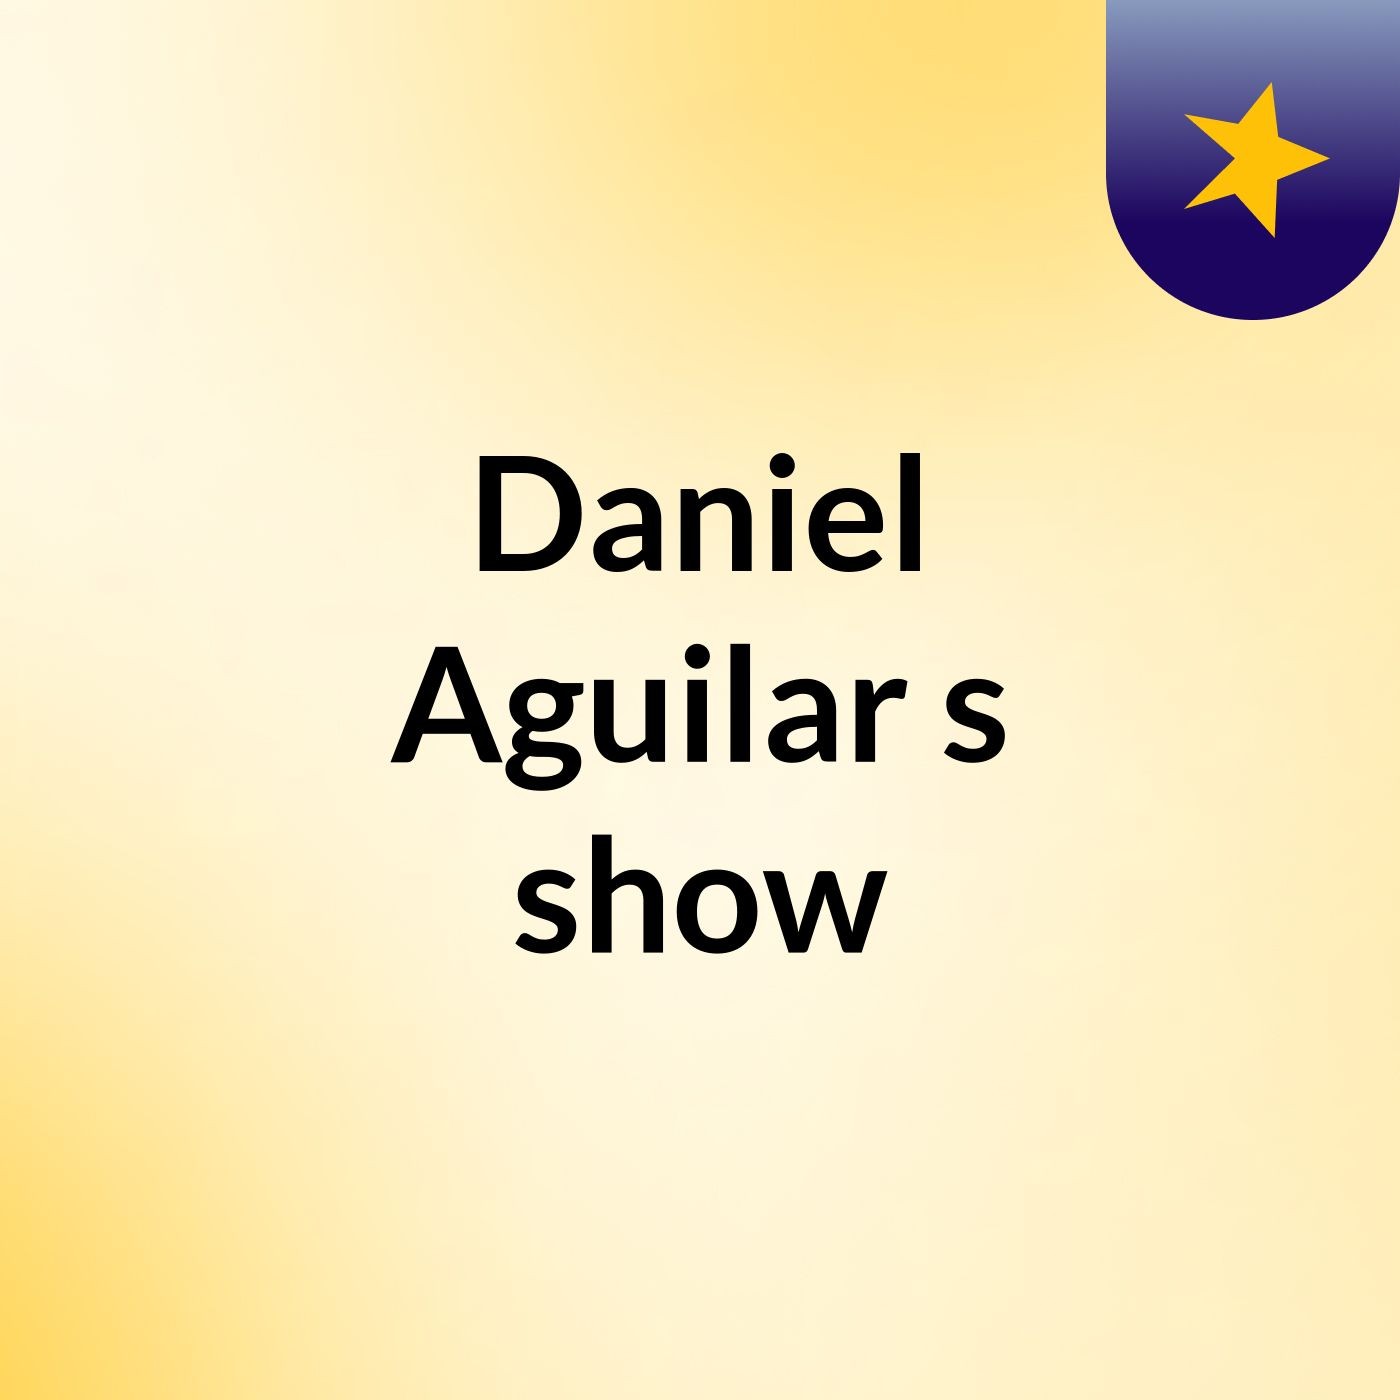 Daniel Aguilar's show